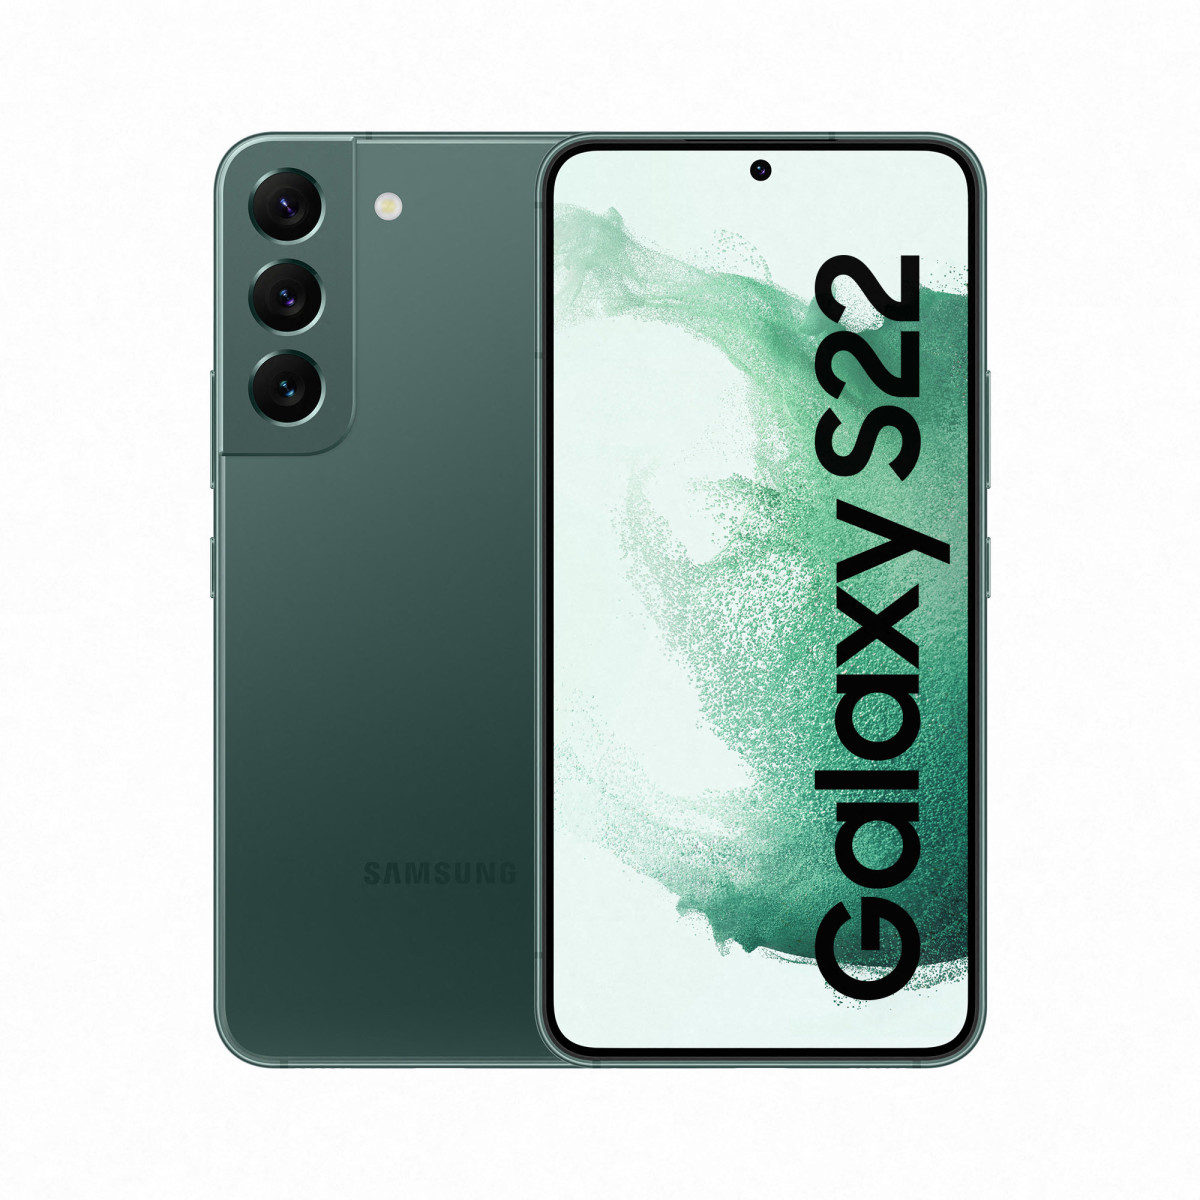 S22 5G 256GB - Green